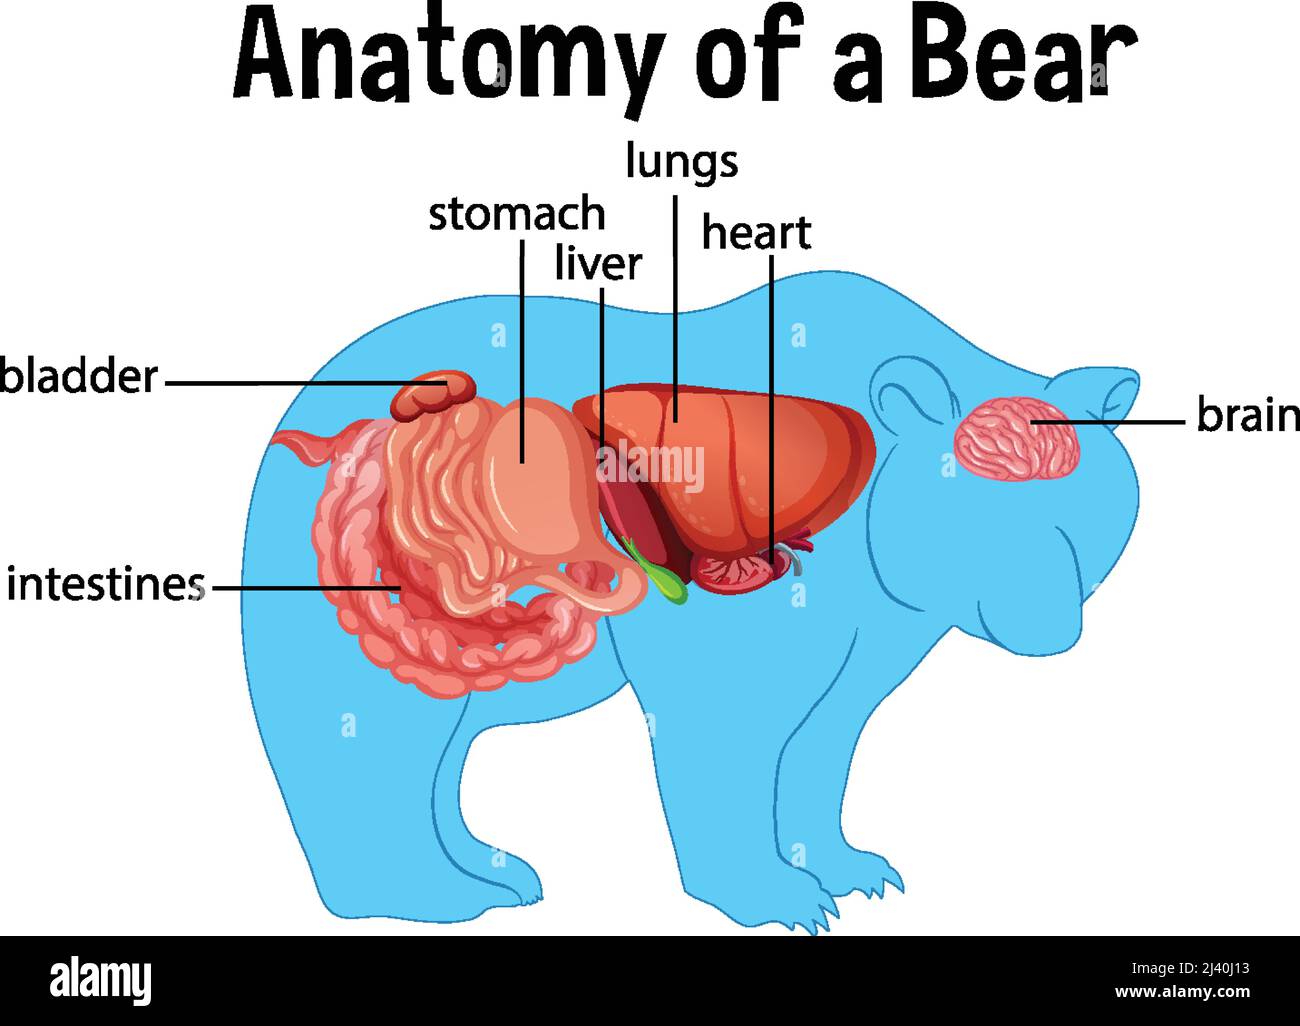 Diagram showing internal organs of a bear illustration Stock Vector ...